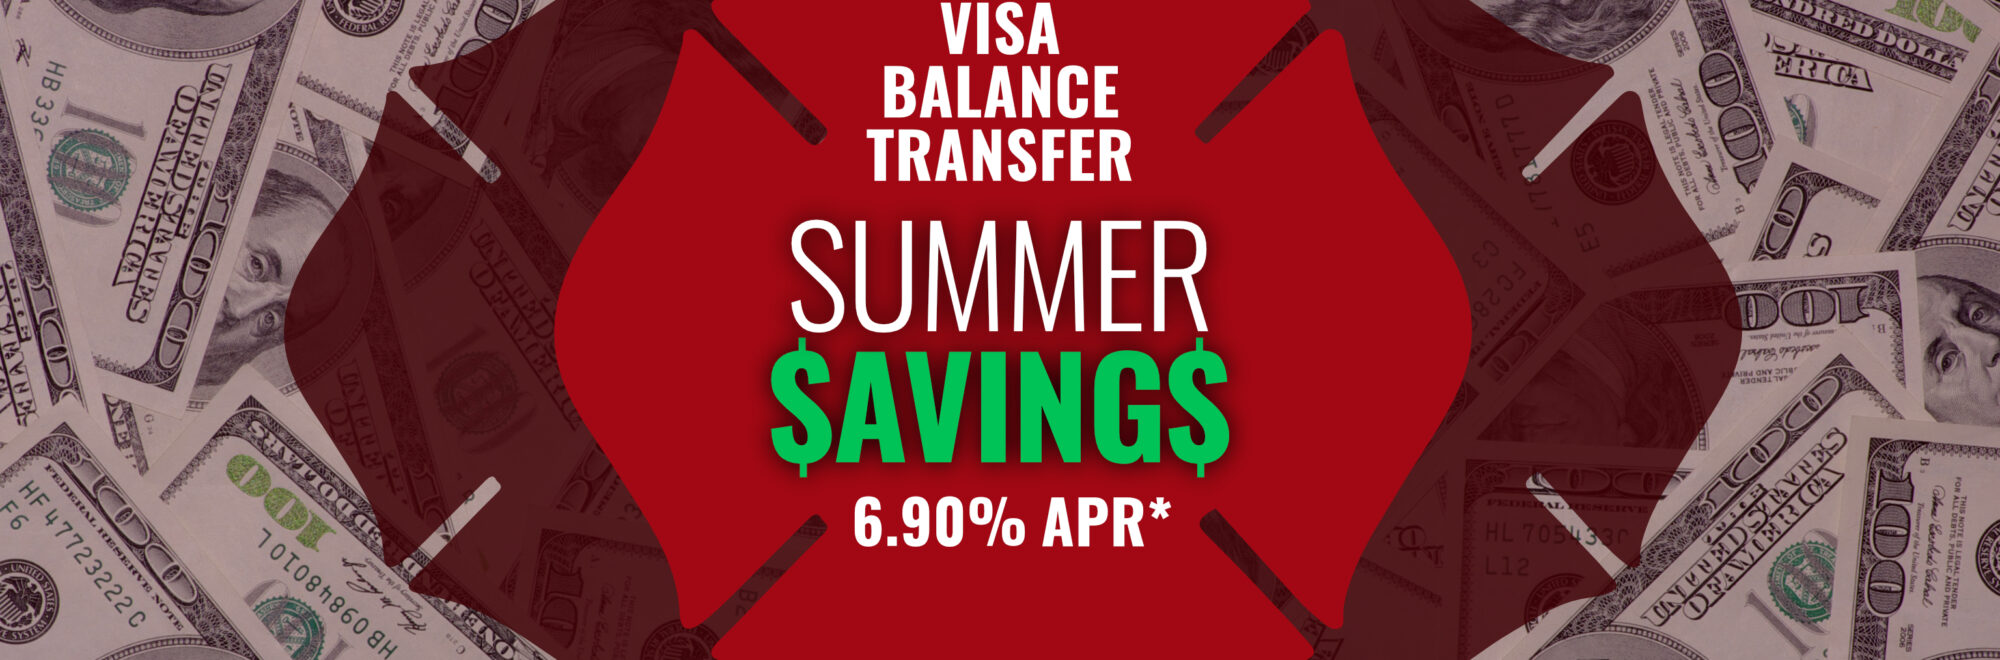 Summer 6.90% APR (Annual Percentage Rate) VISA Balance Transfer